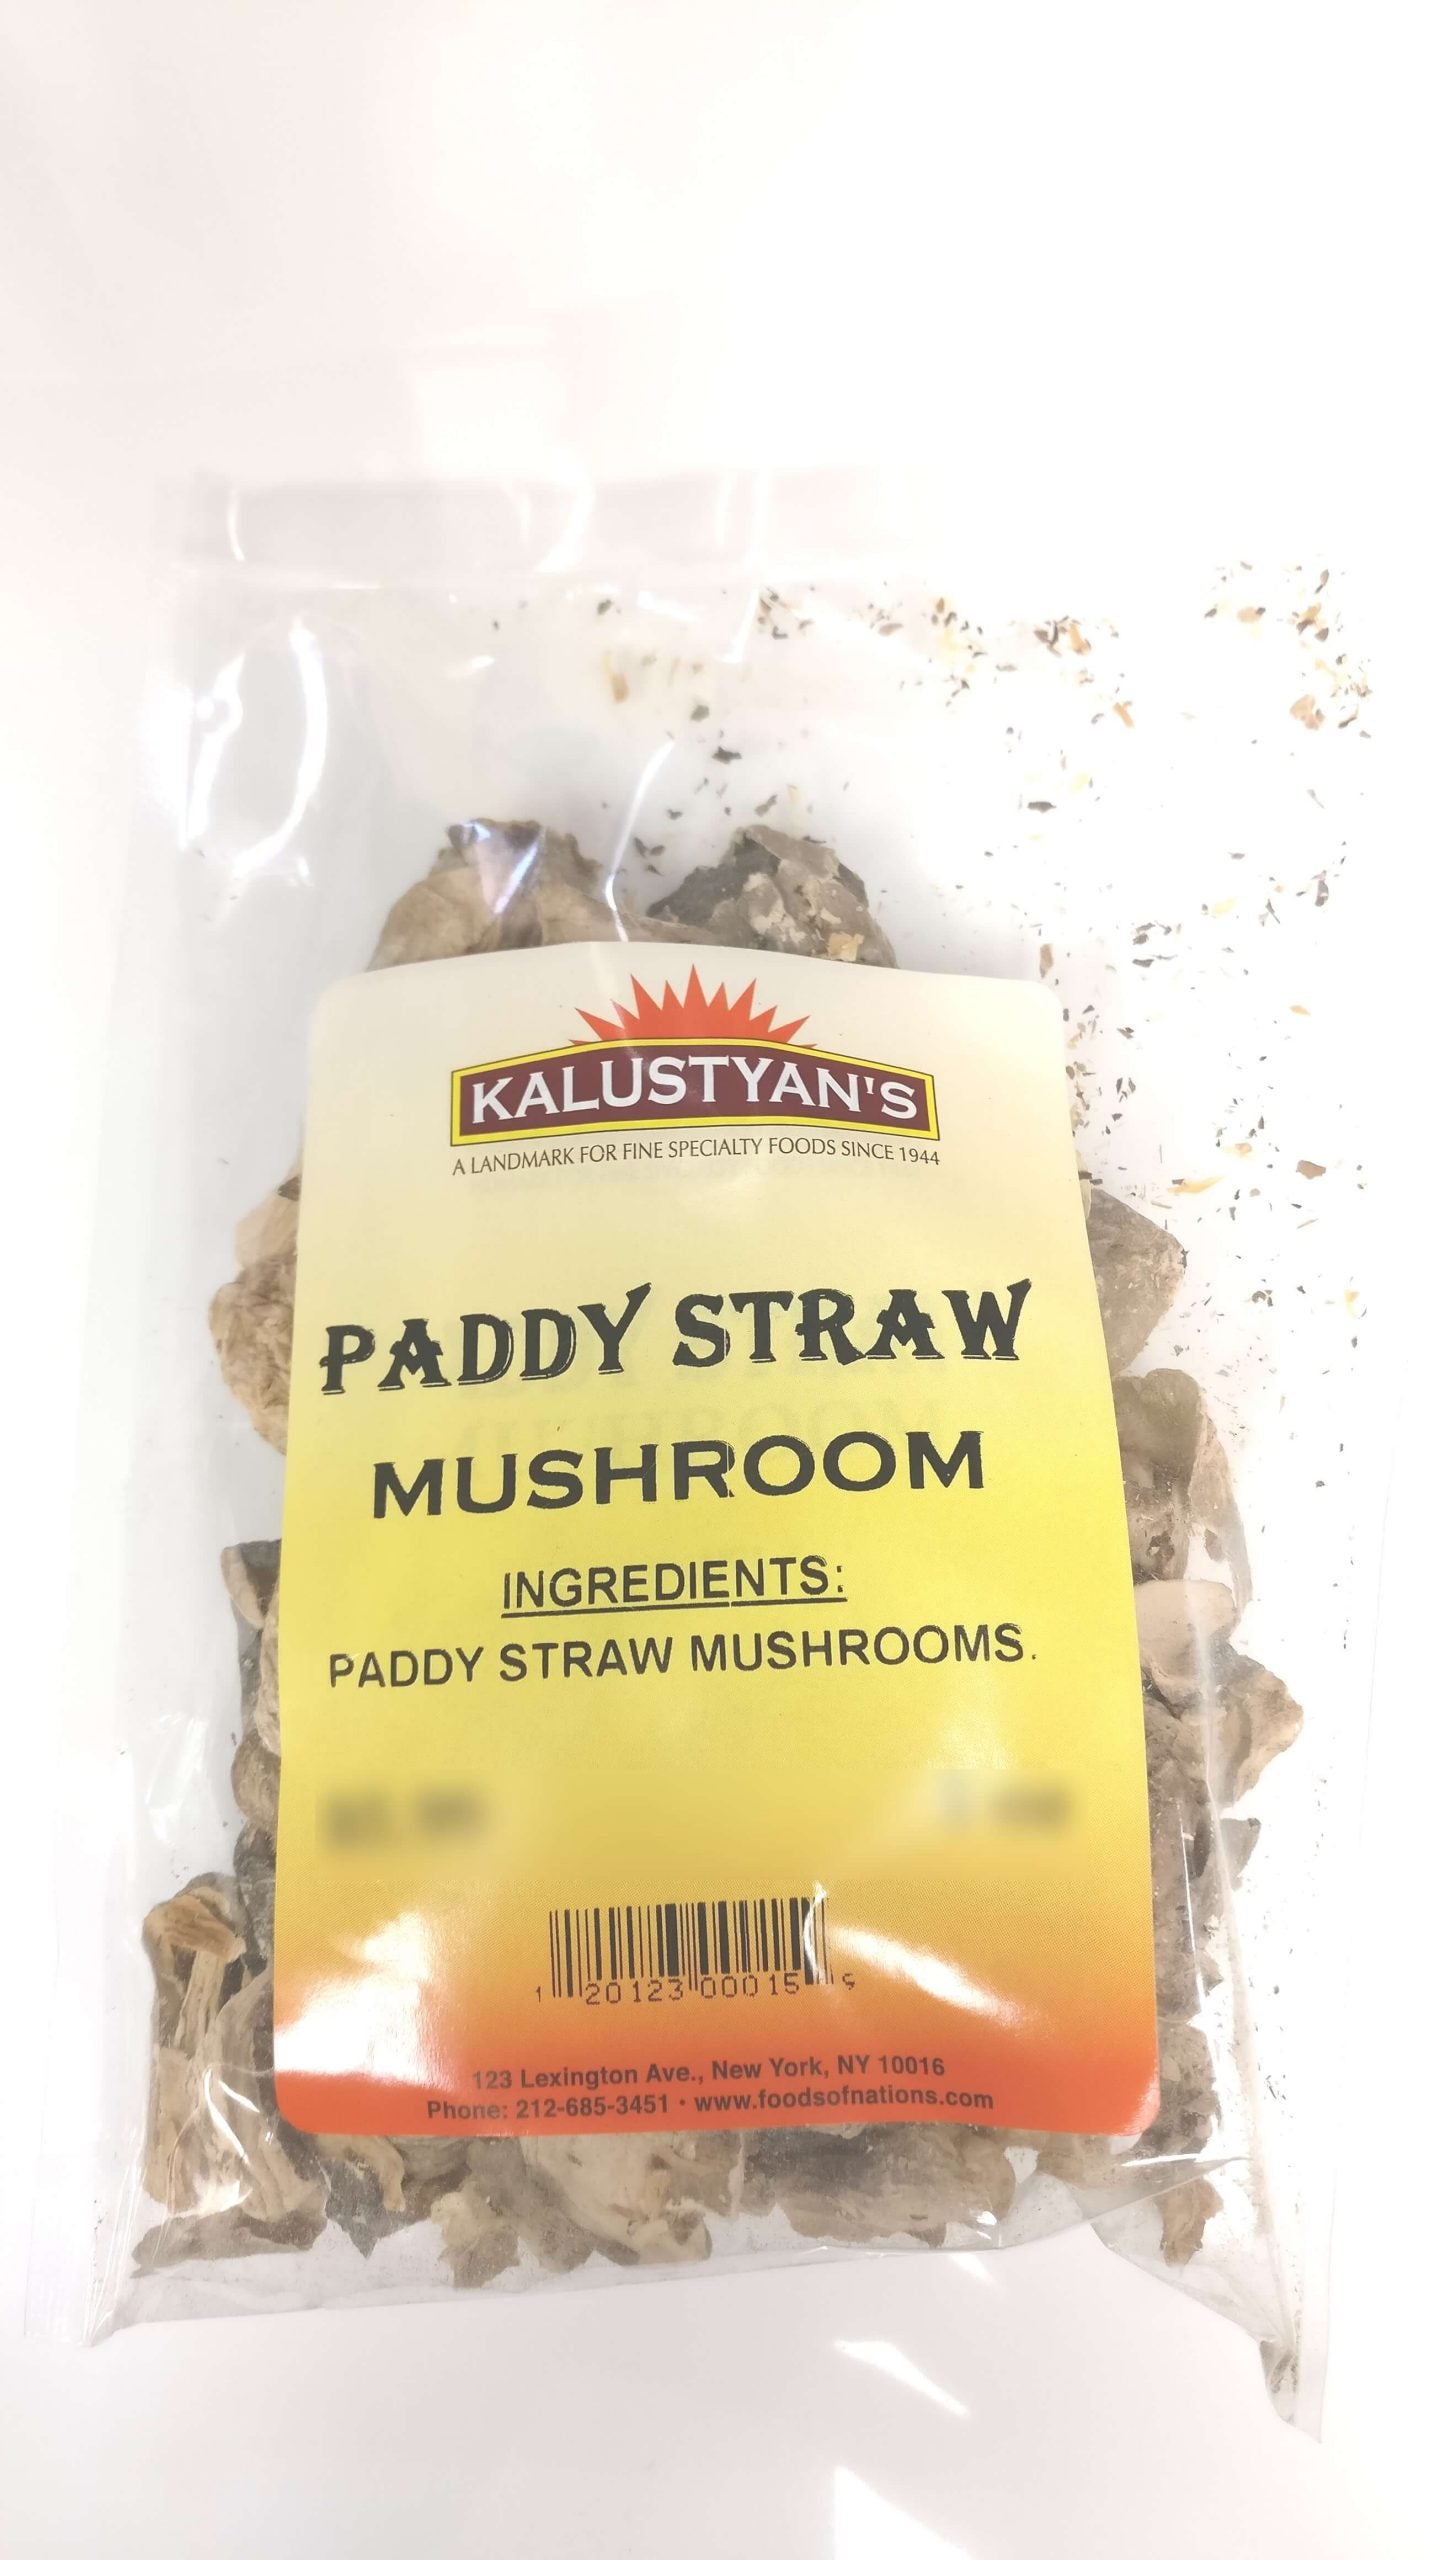 Asian Best Straw Mushroom, Medium Peeled, 15 Oz